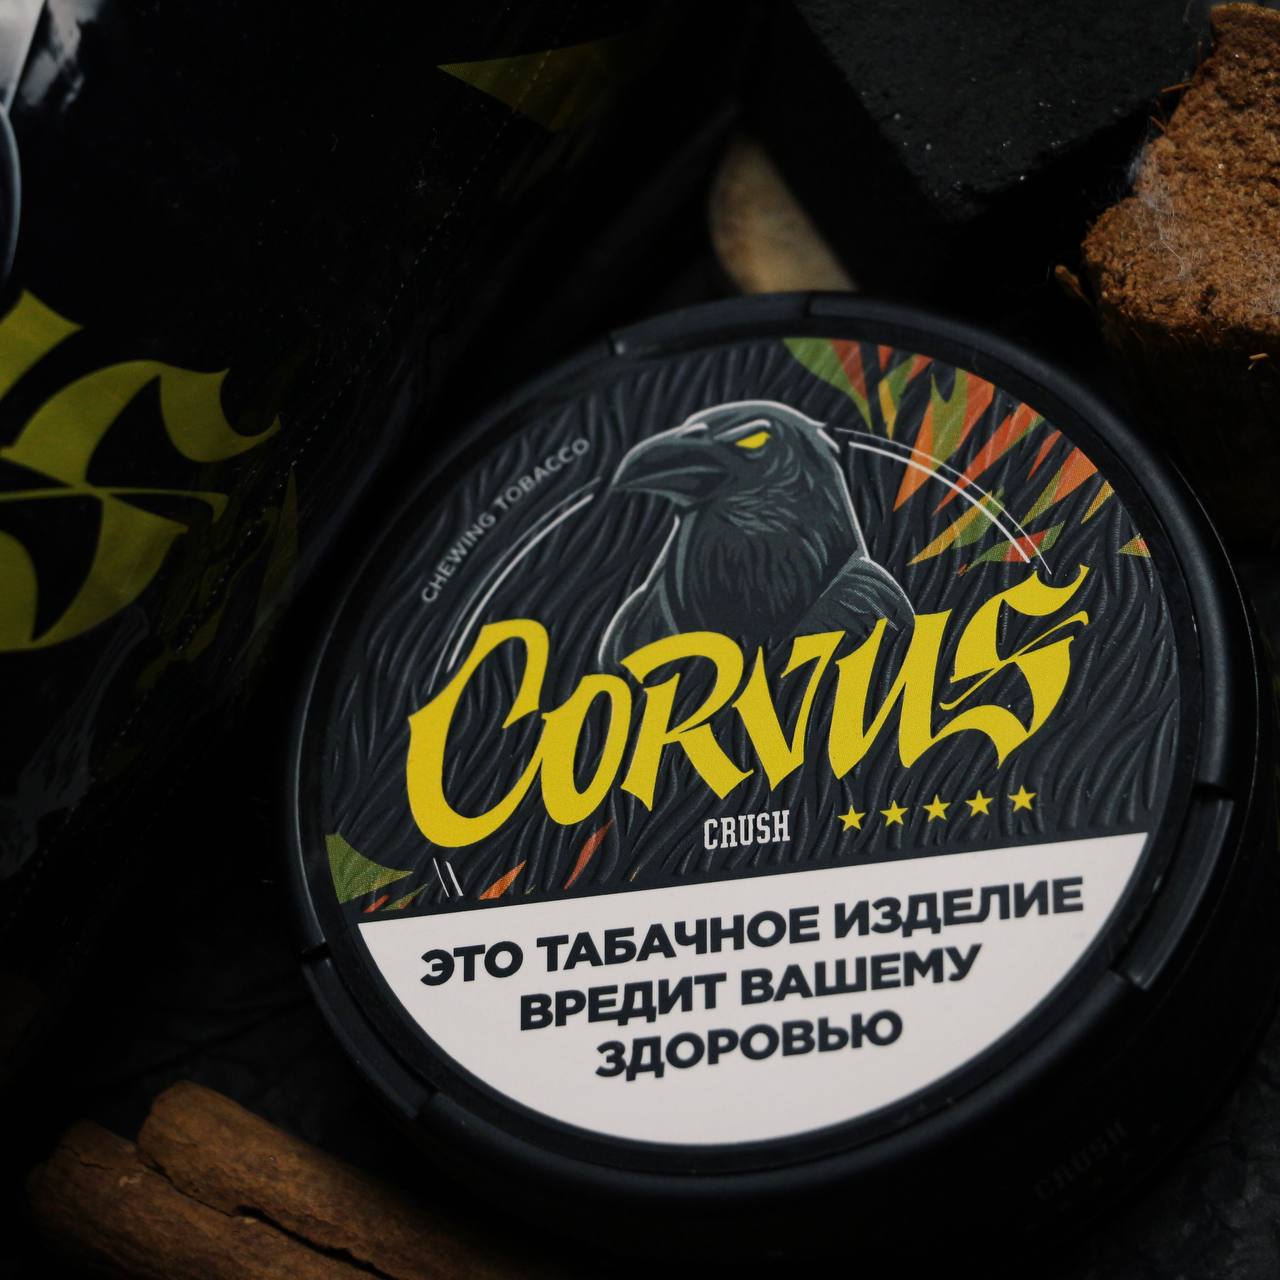 Corvus Toss жевательный табак. Жевательный табак Corvus Toss упаковка. Corvus Crush крепость. Жевательный табак корвус